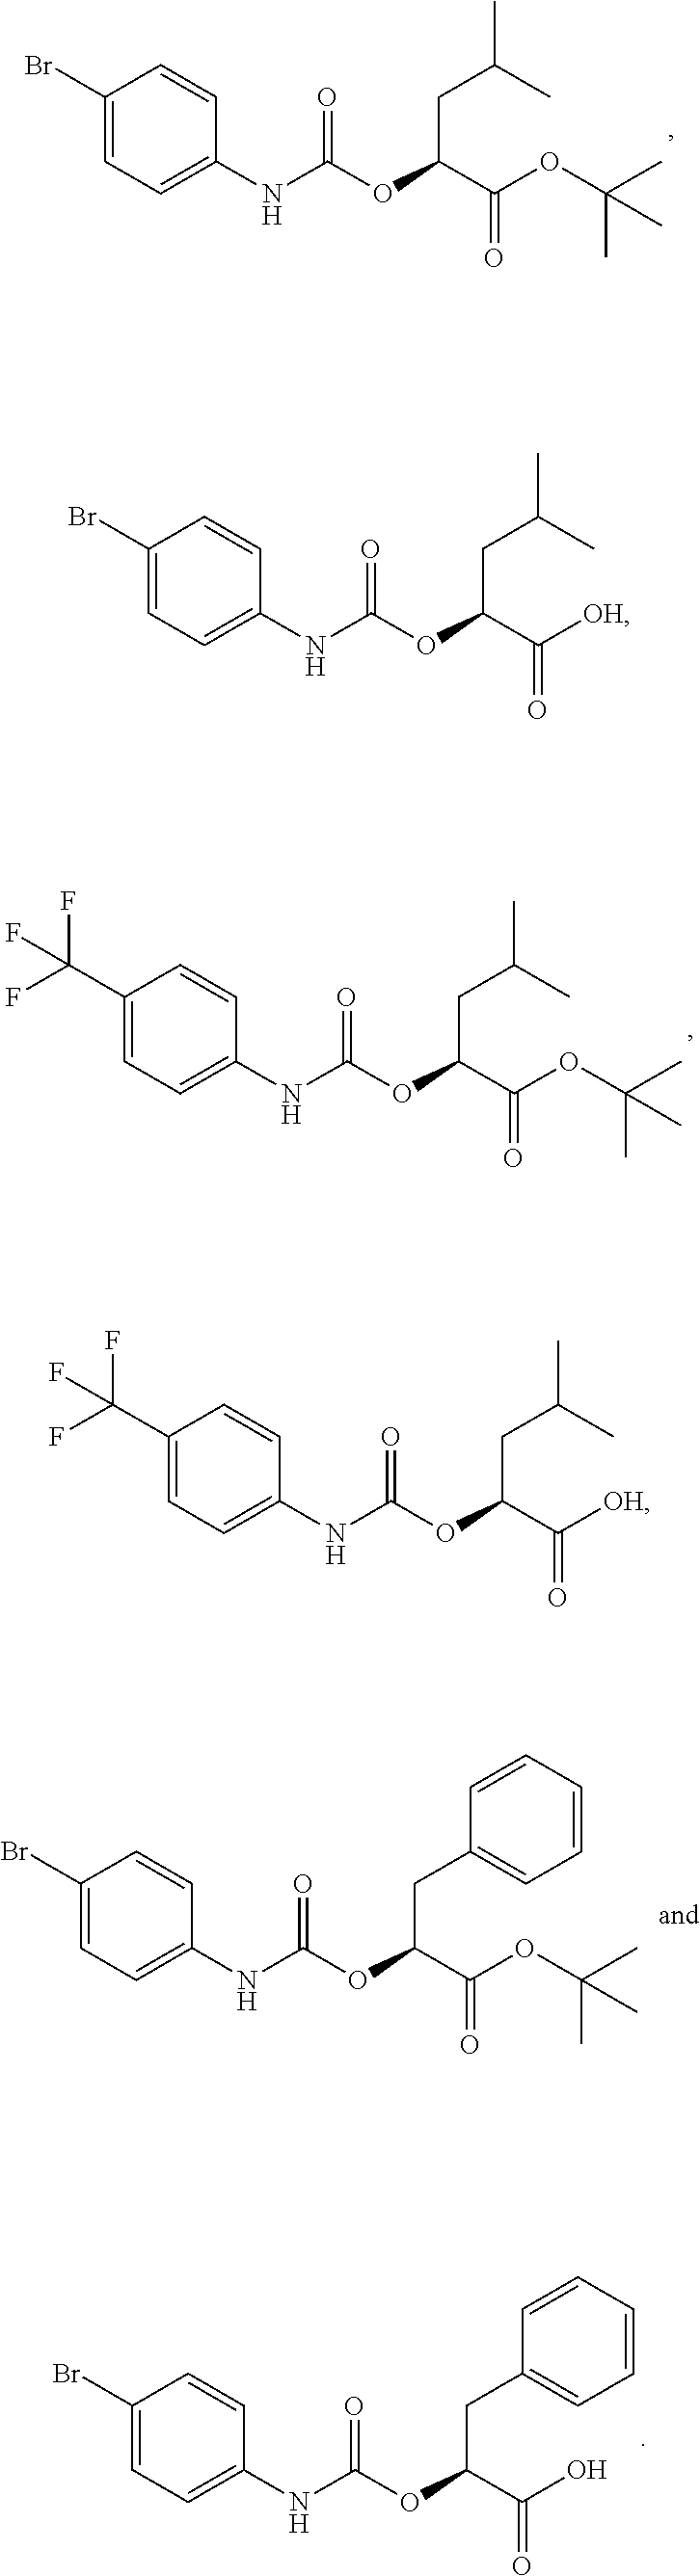 Phenylcarbamate derivatives as formyl peptide receptor modulators